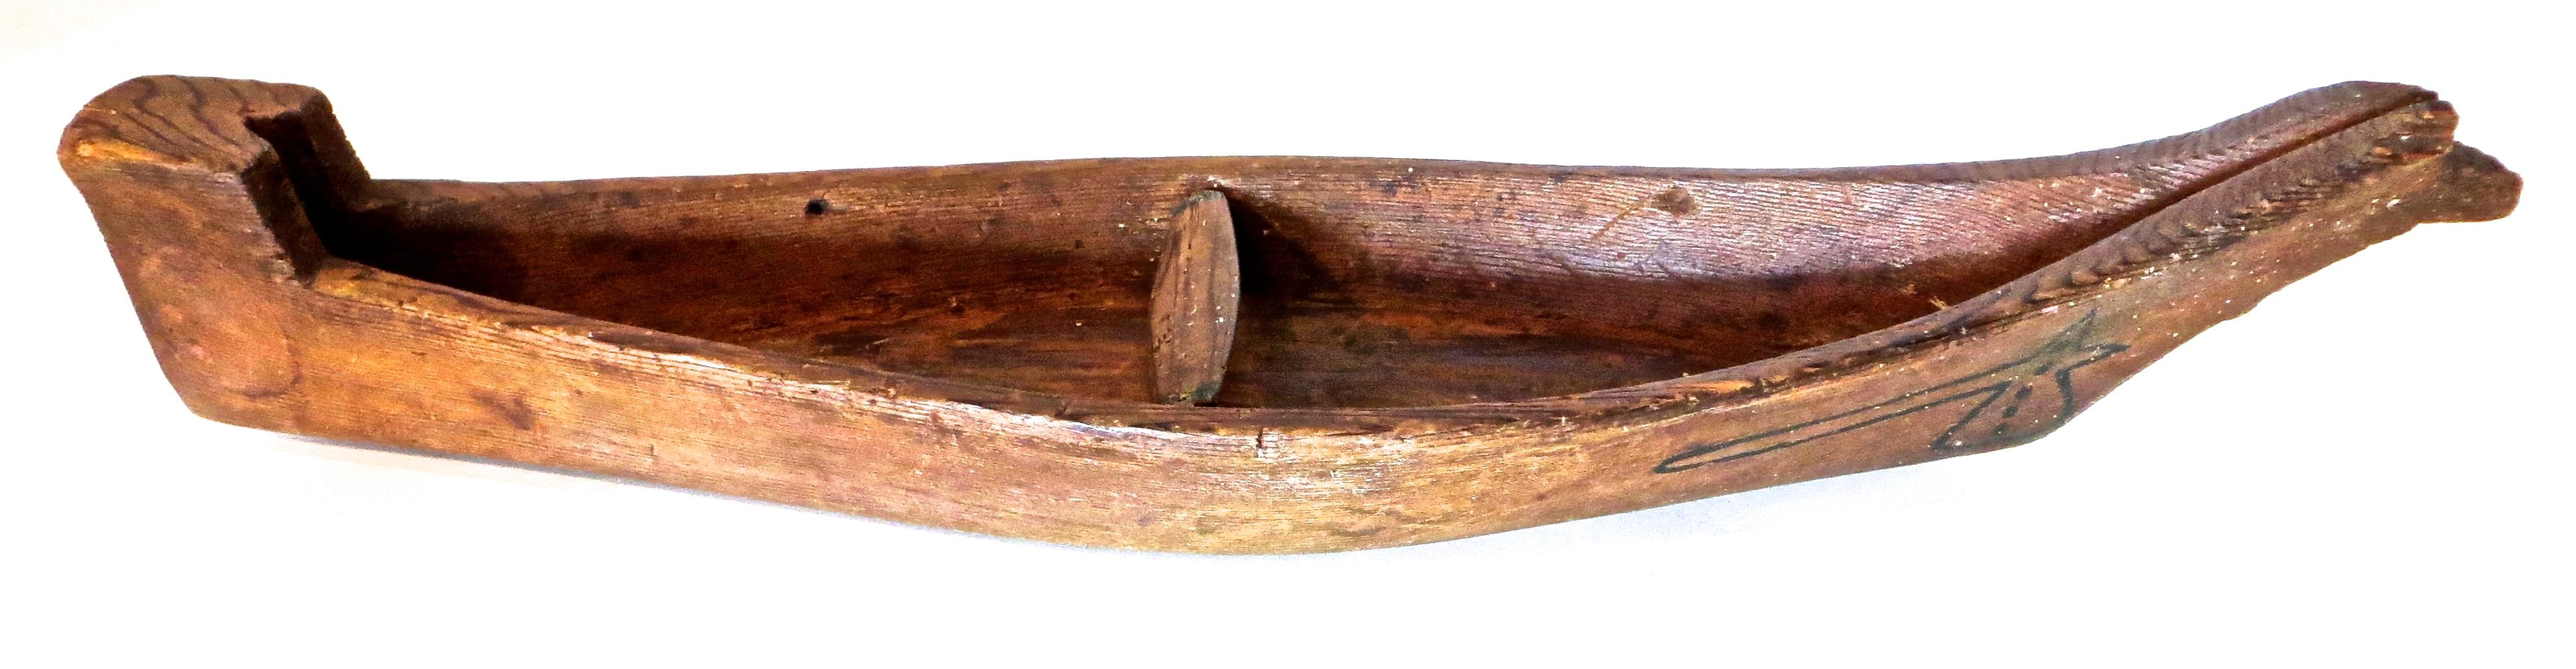 indian canoe